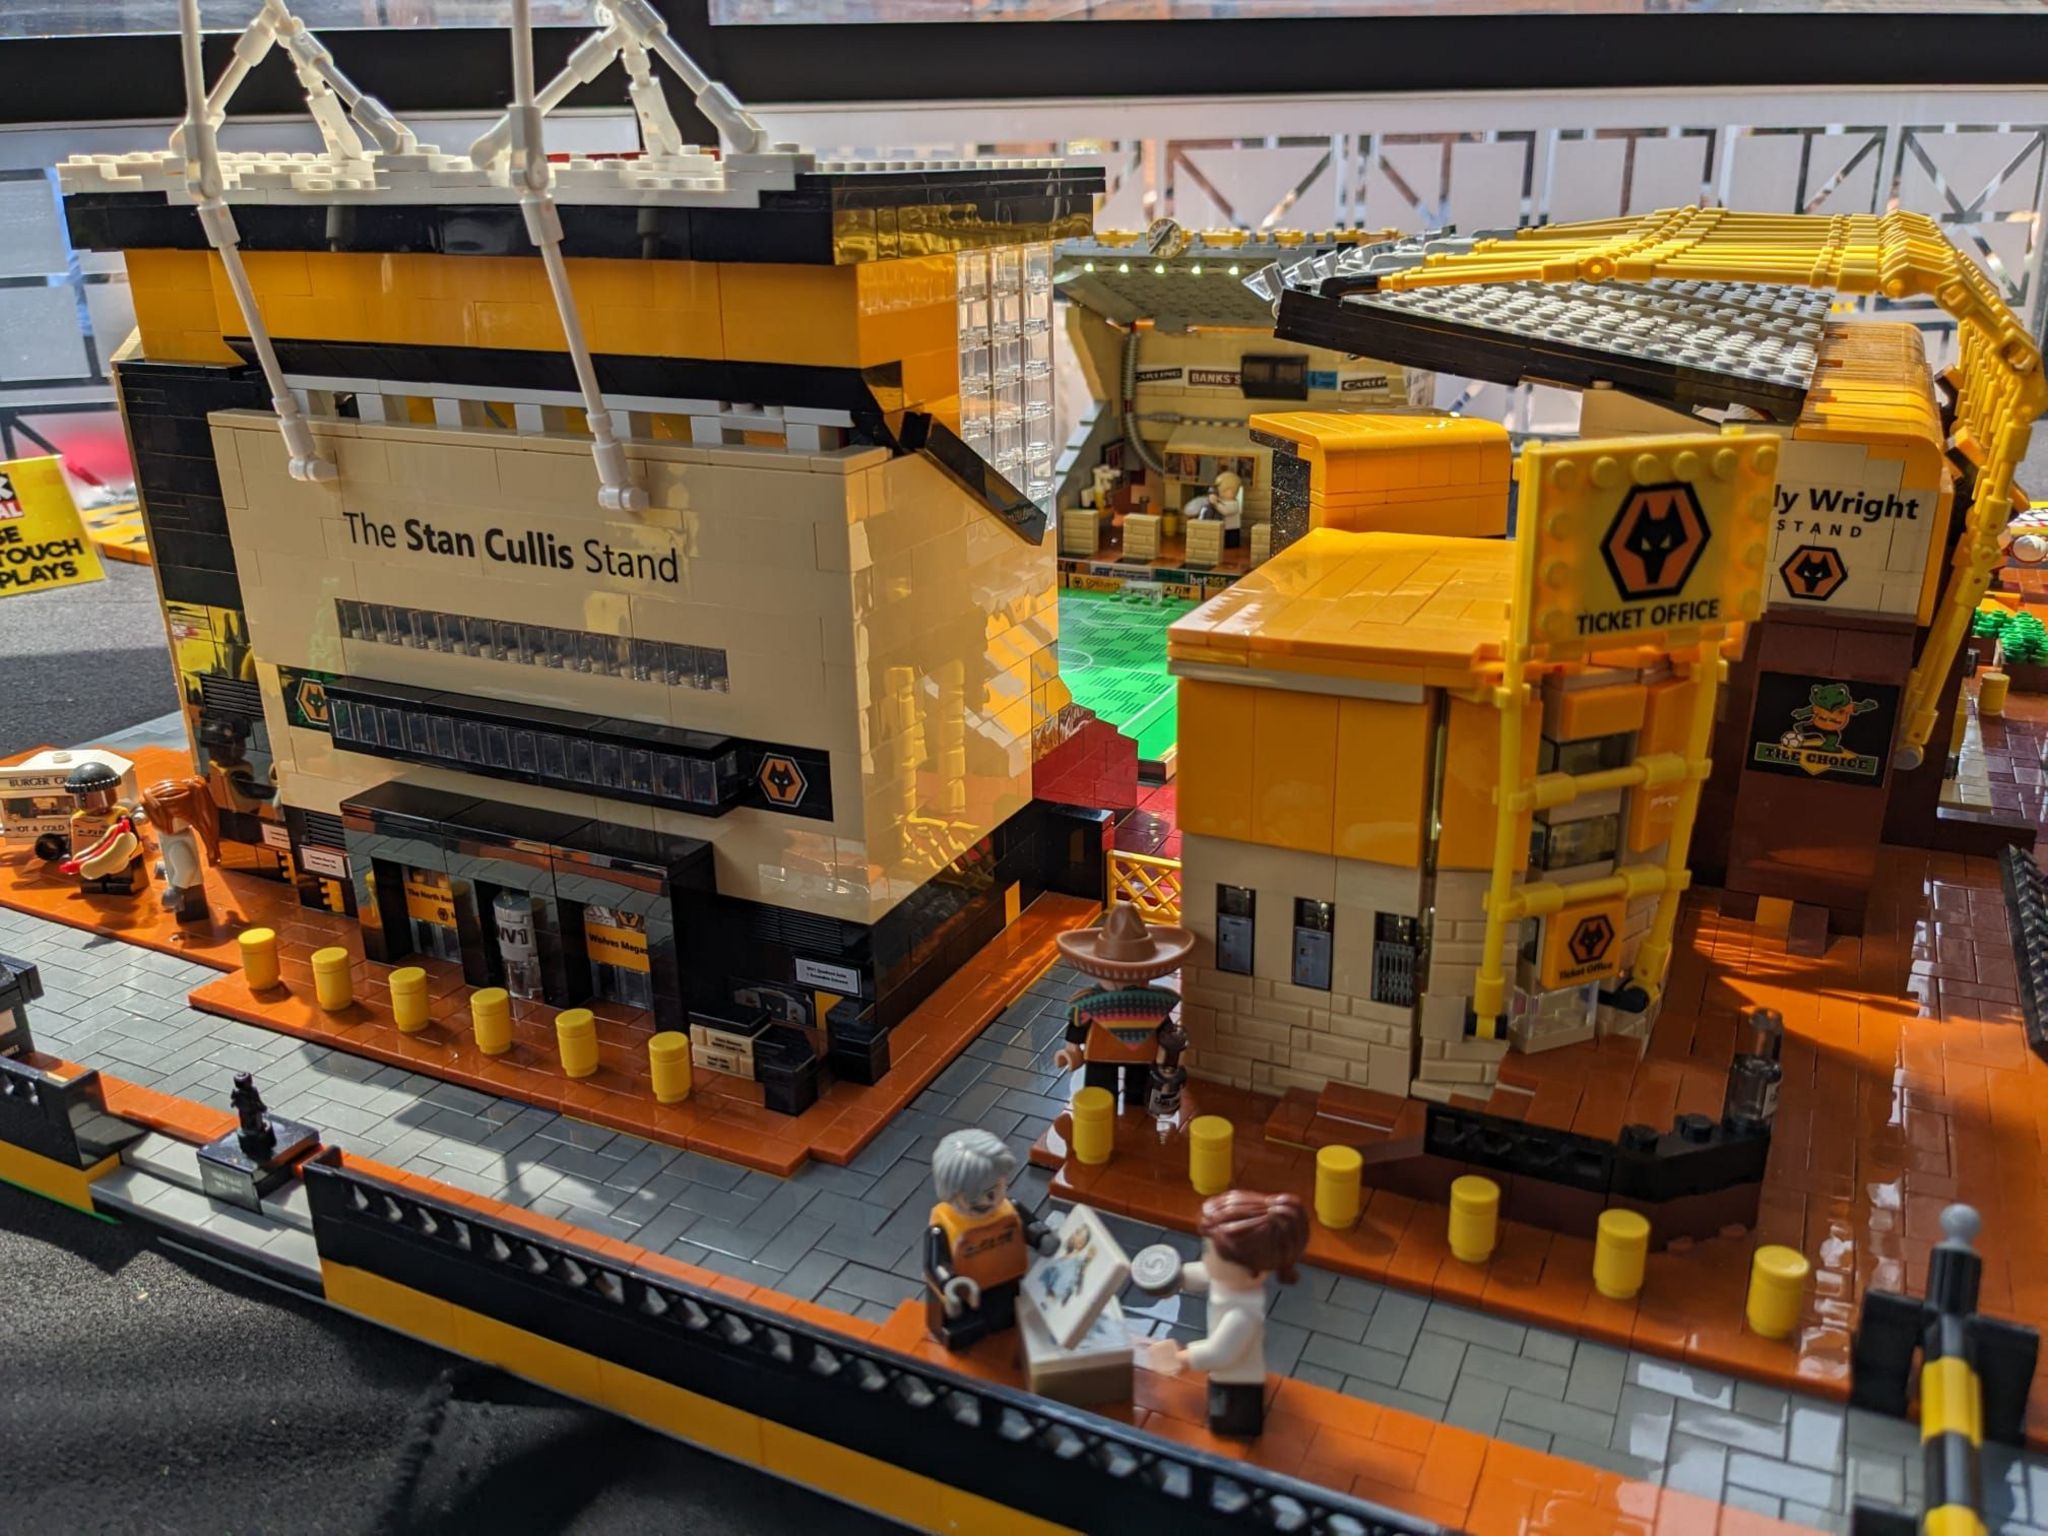 Molineux Stadium in Lego form